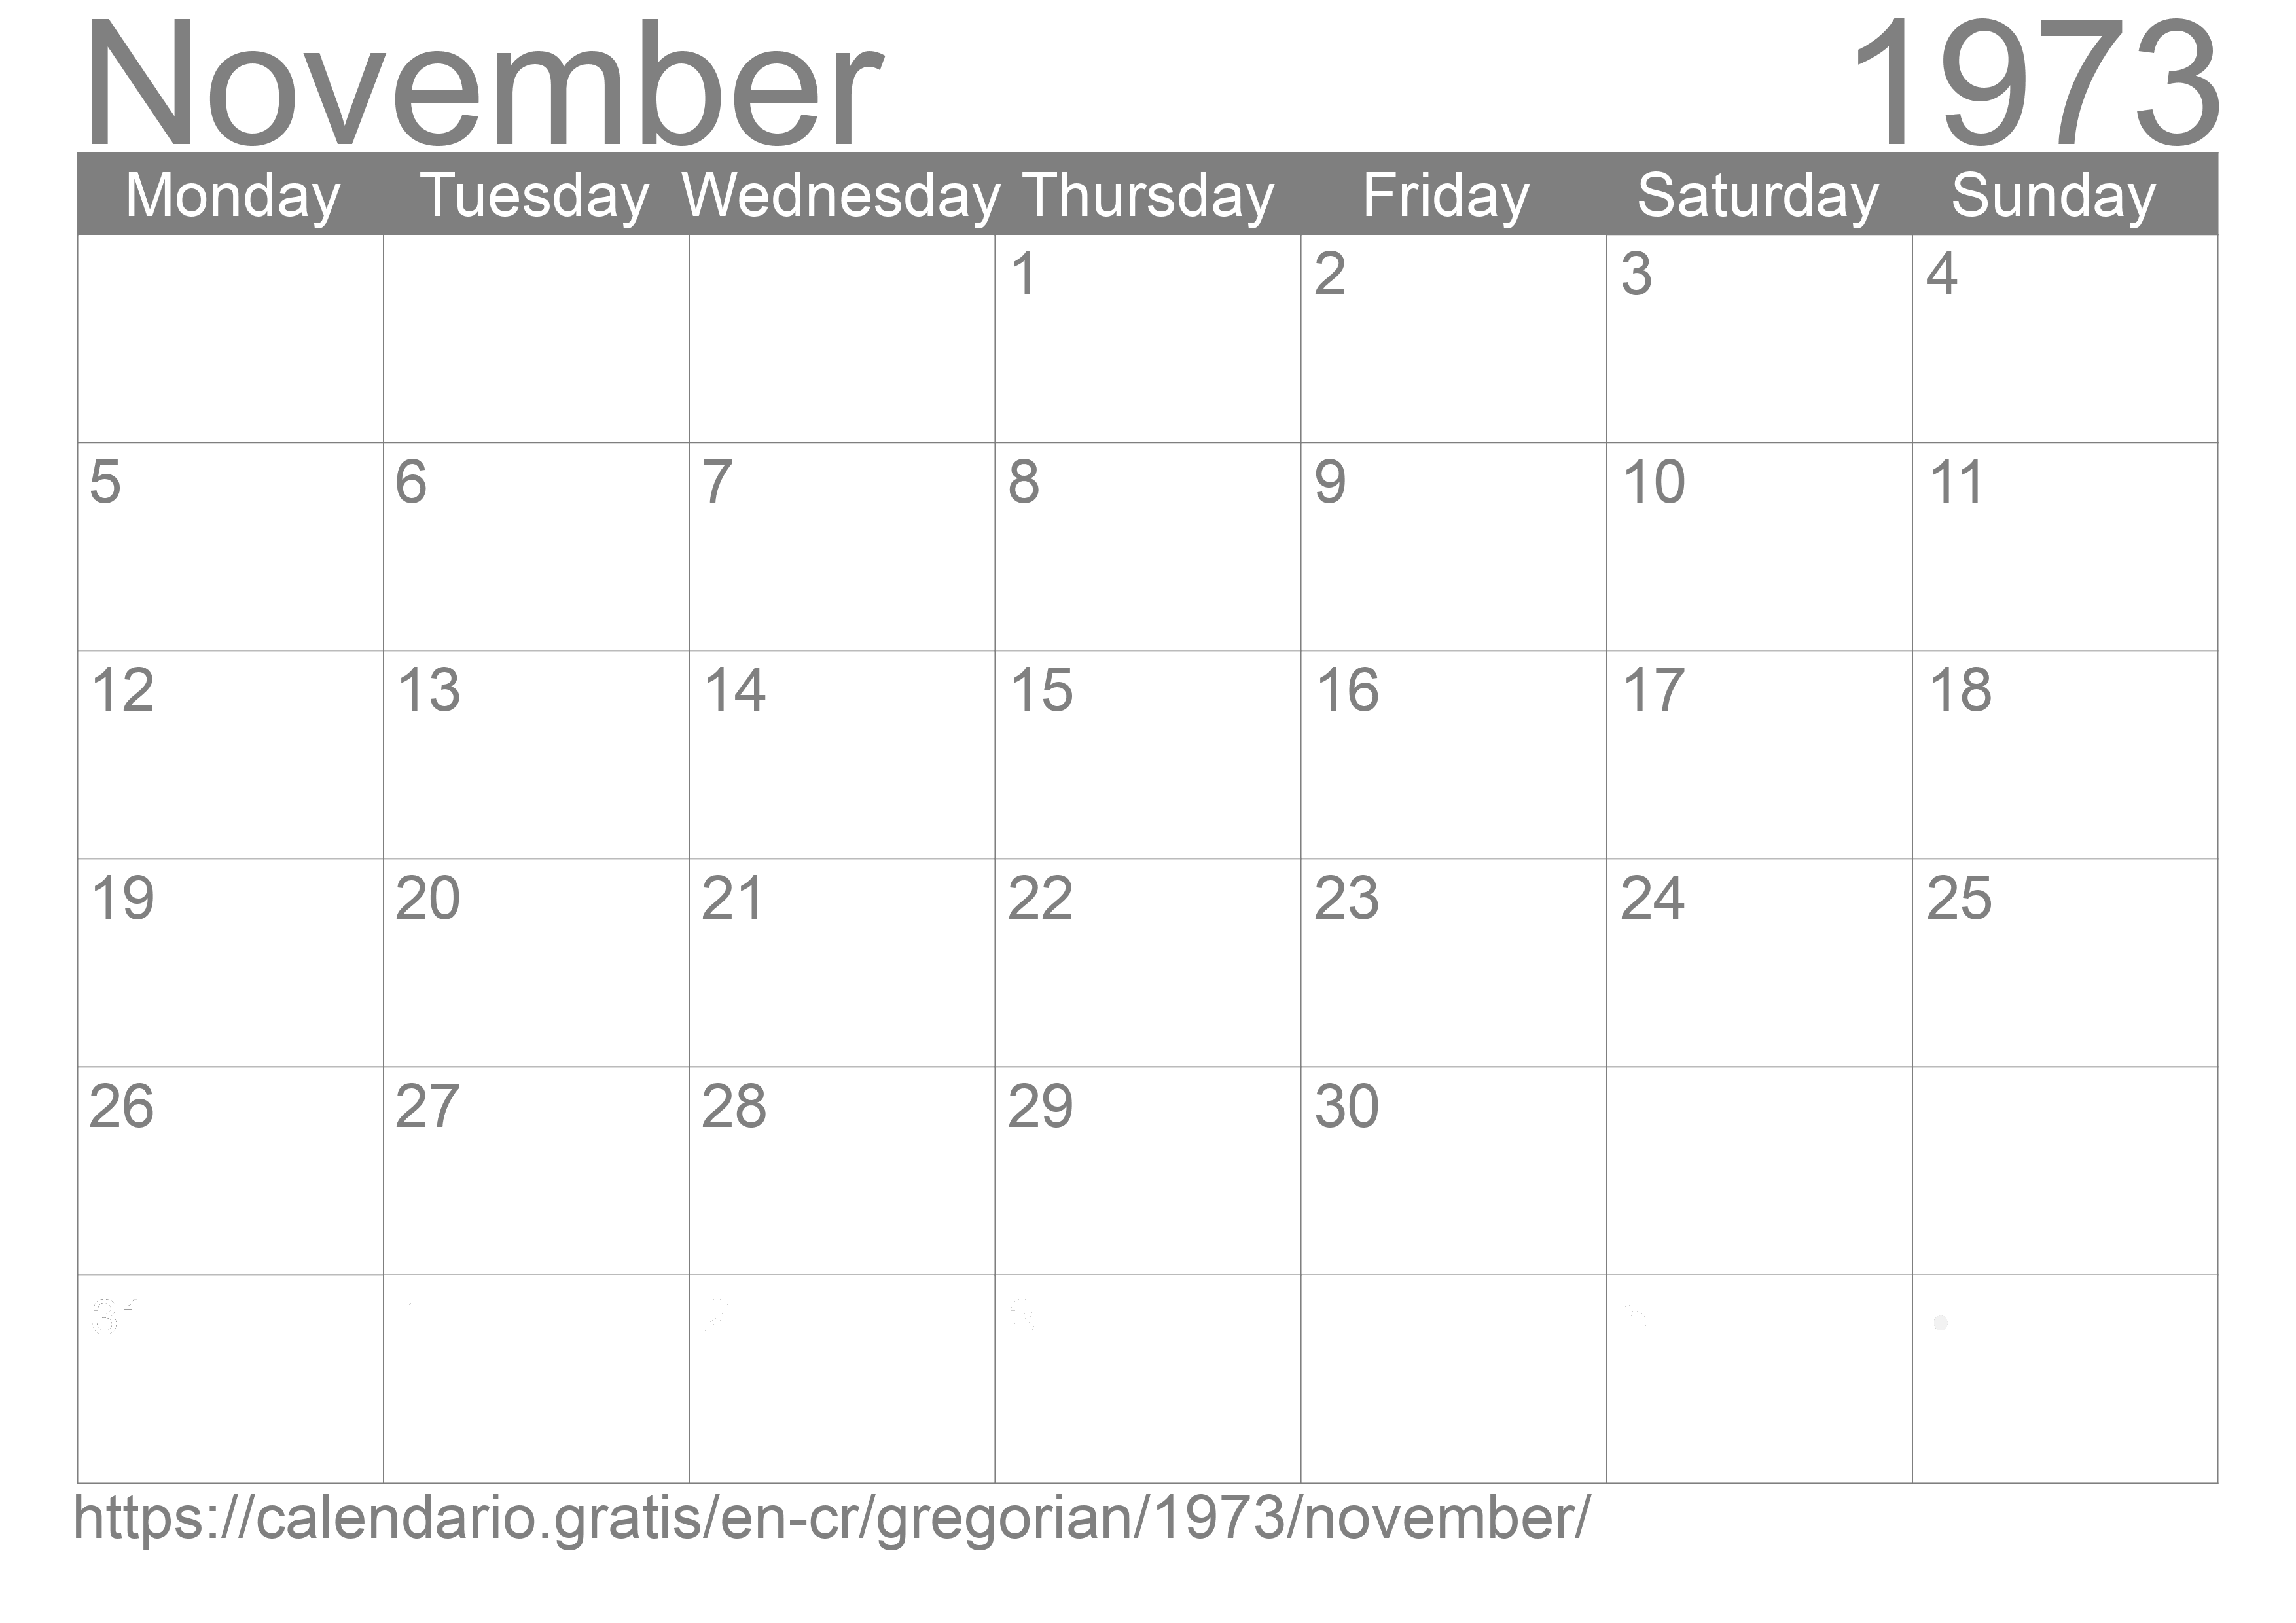 Calendar November 1973 to print